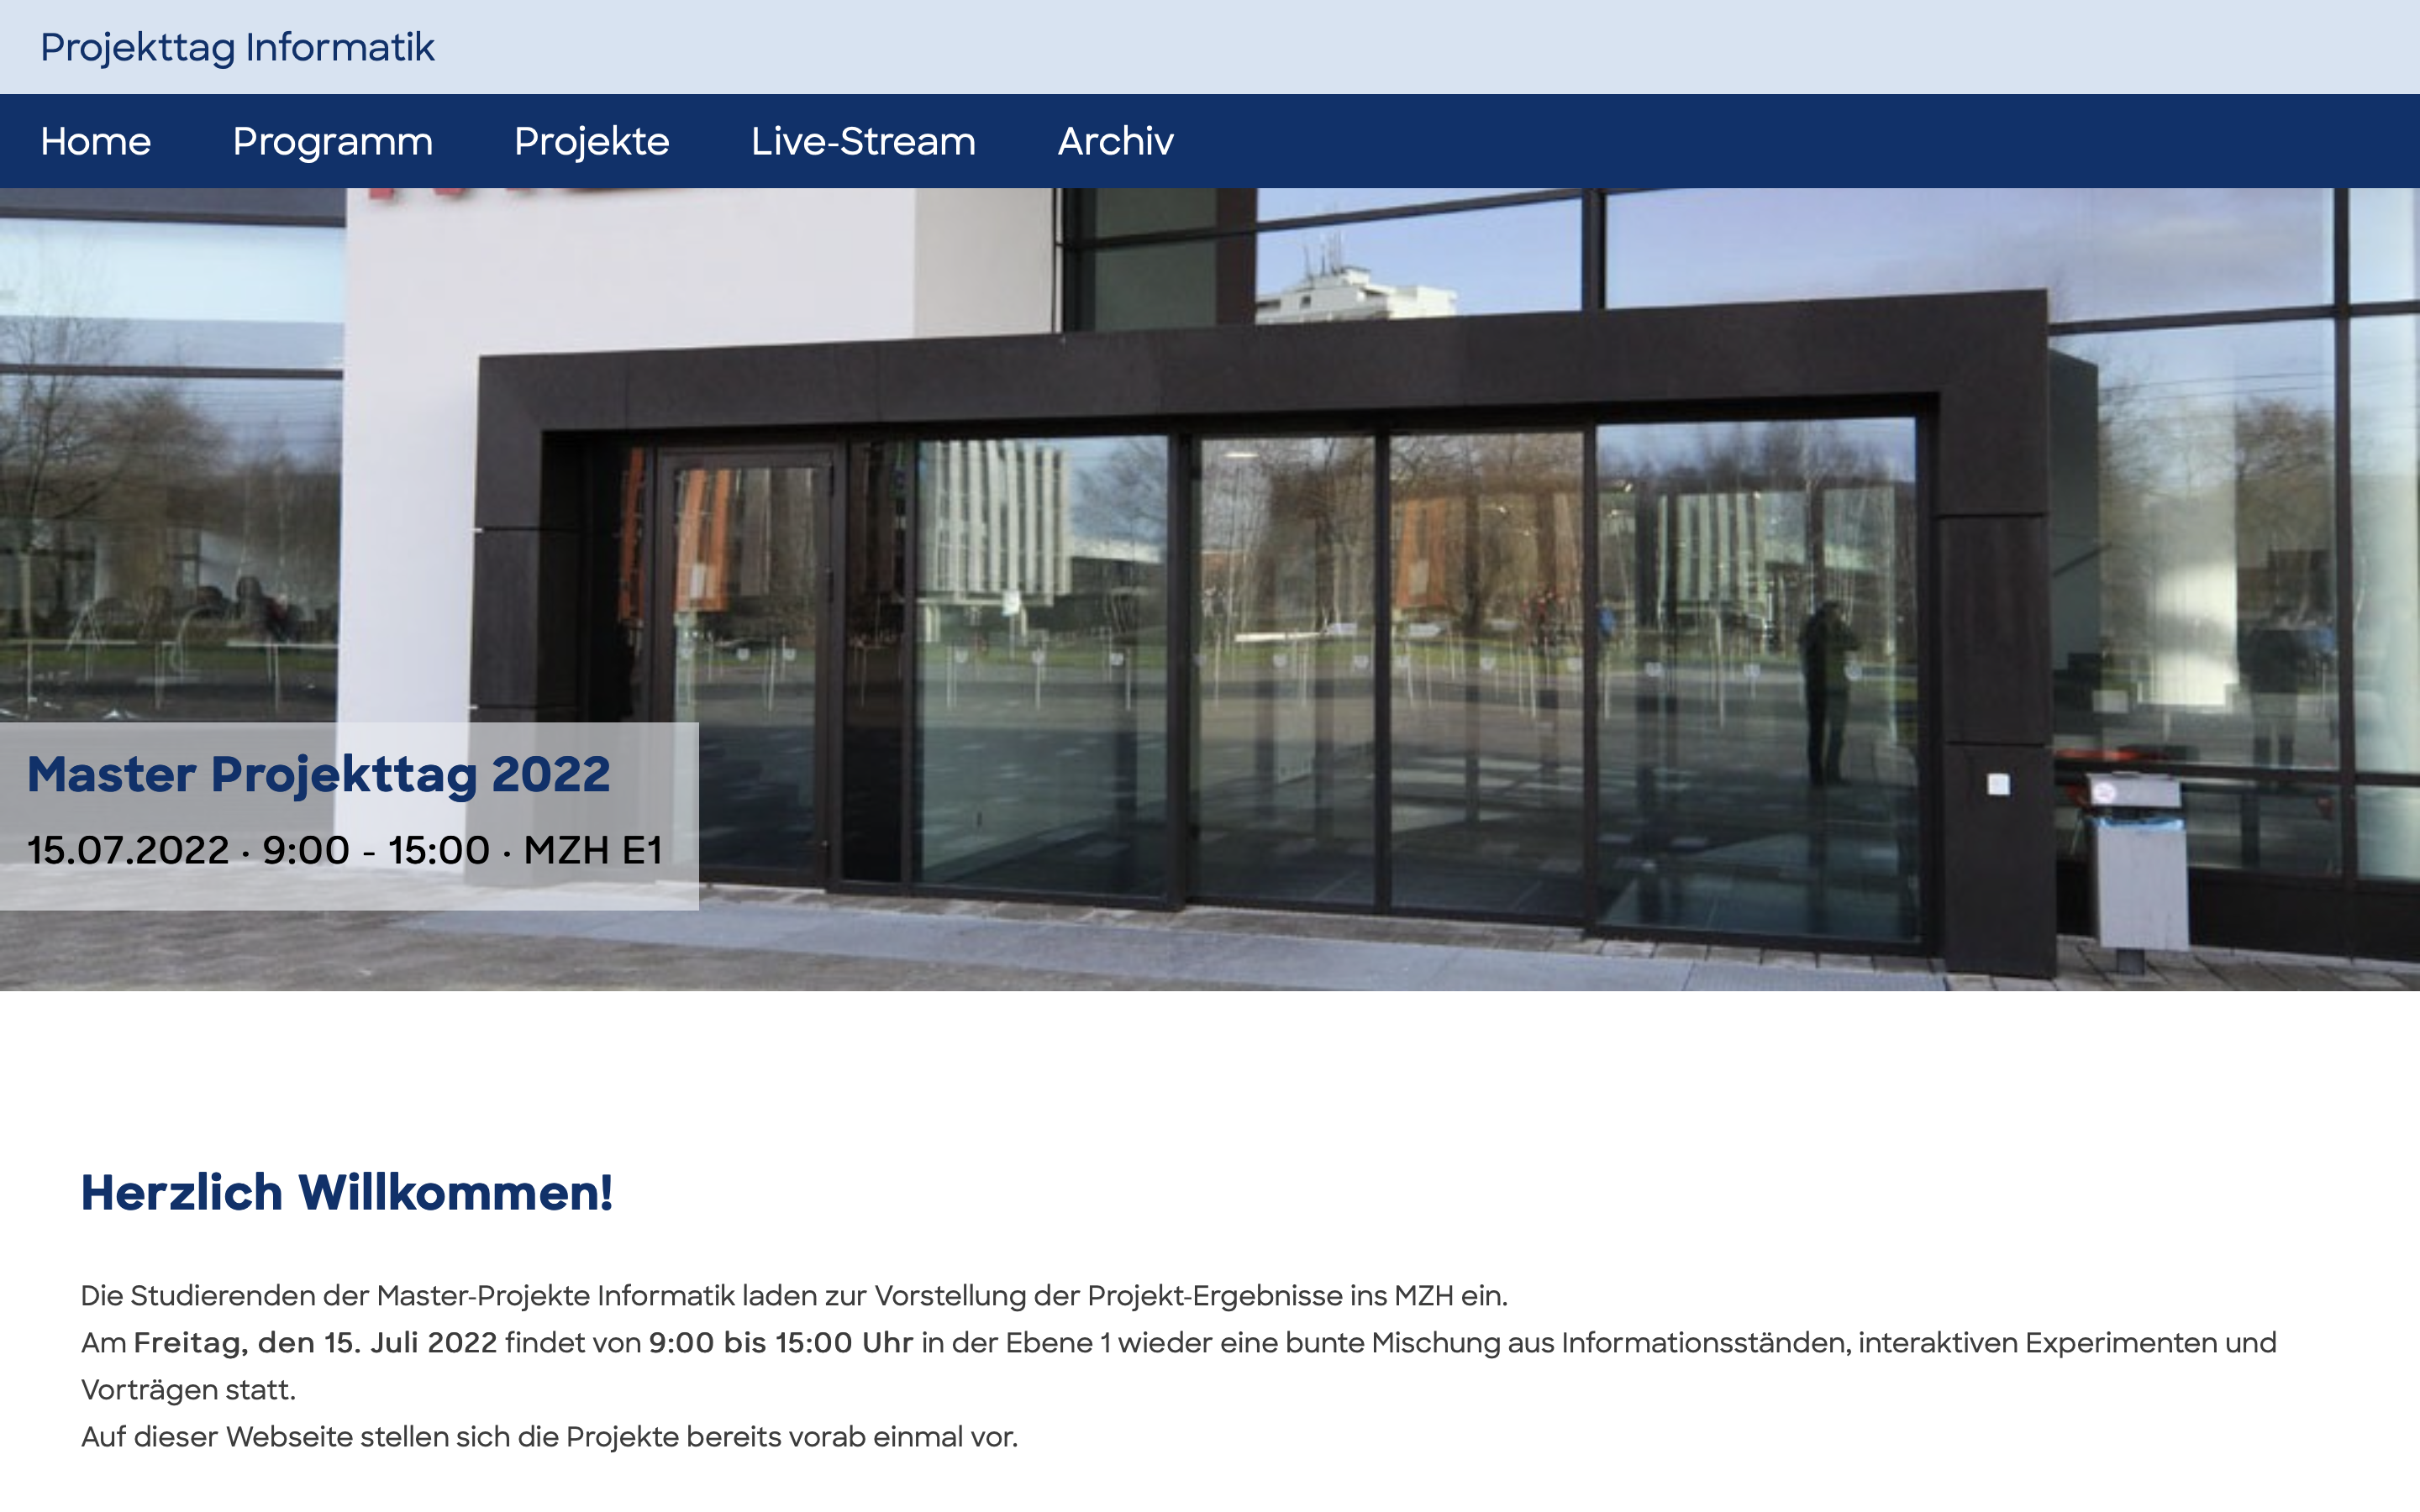 Projekttags-Webseite 2022 Master